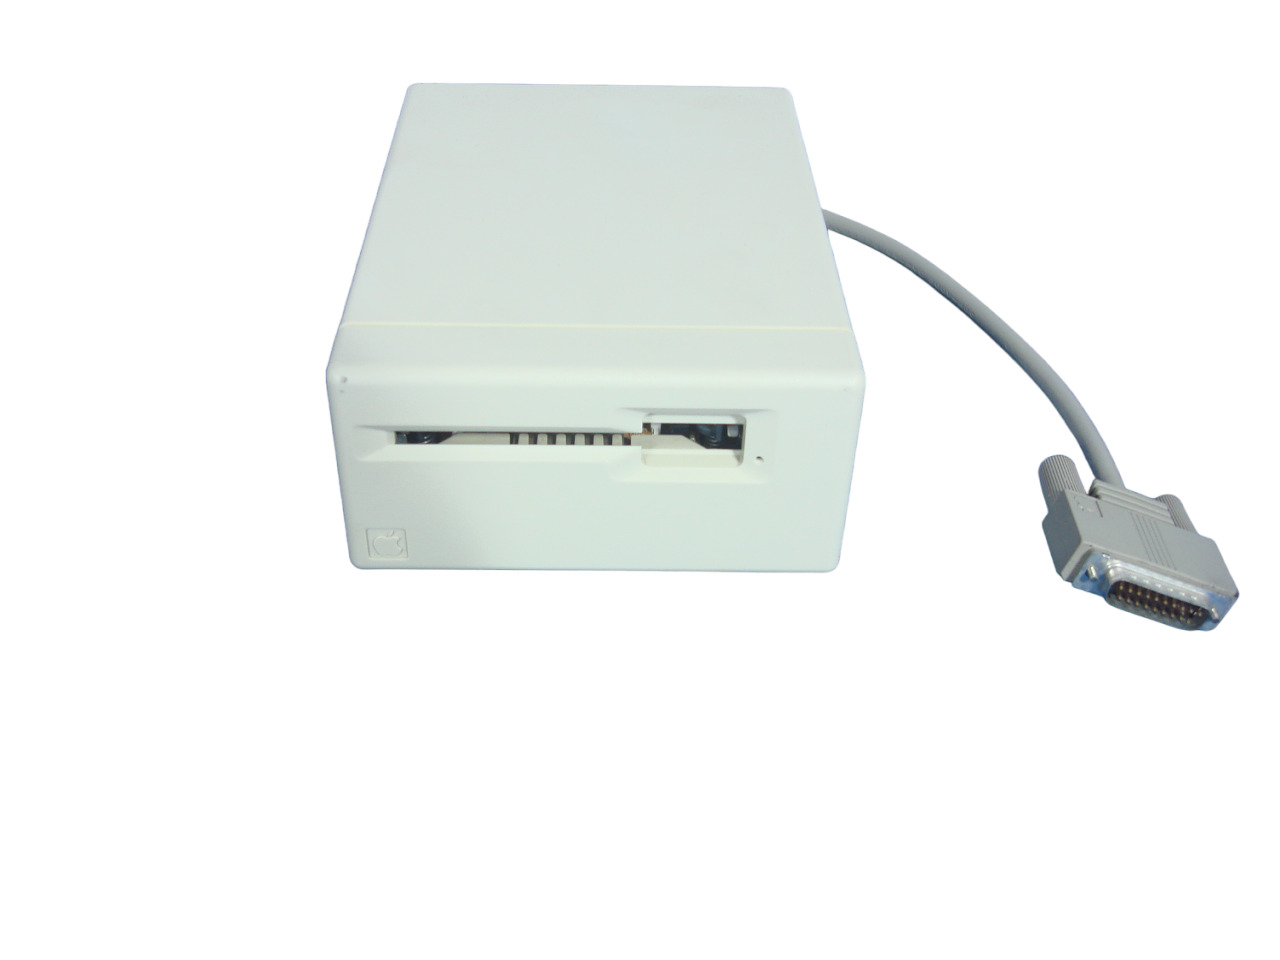 Apple Macintosh M0130 External 400k Floppy Disk Drive for Vintage Mac 128K, 512K